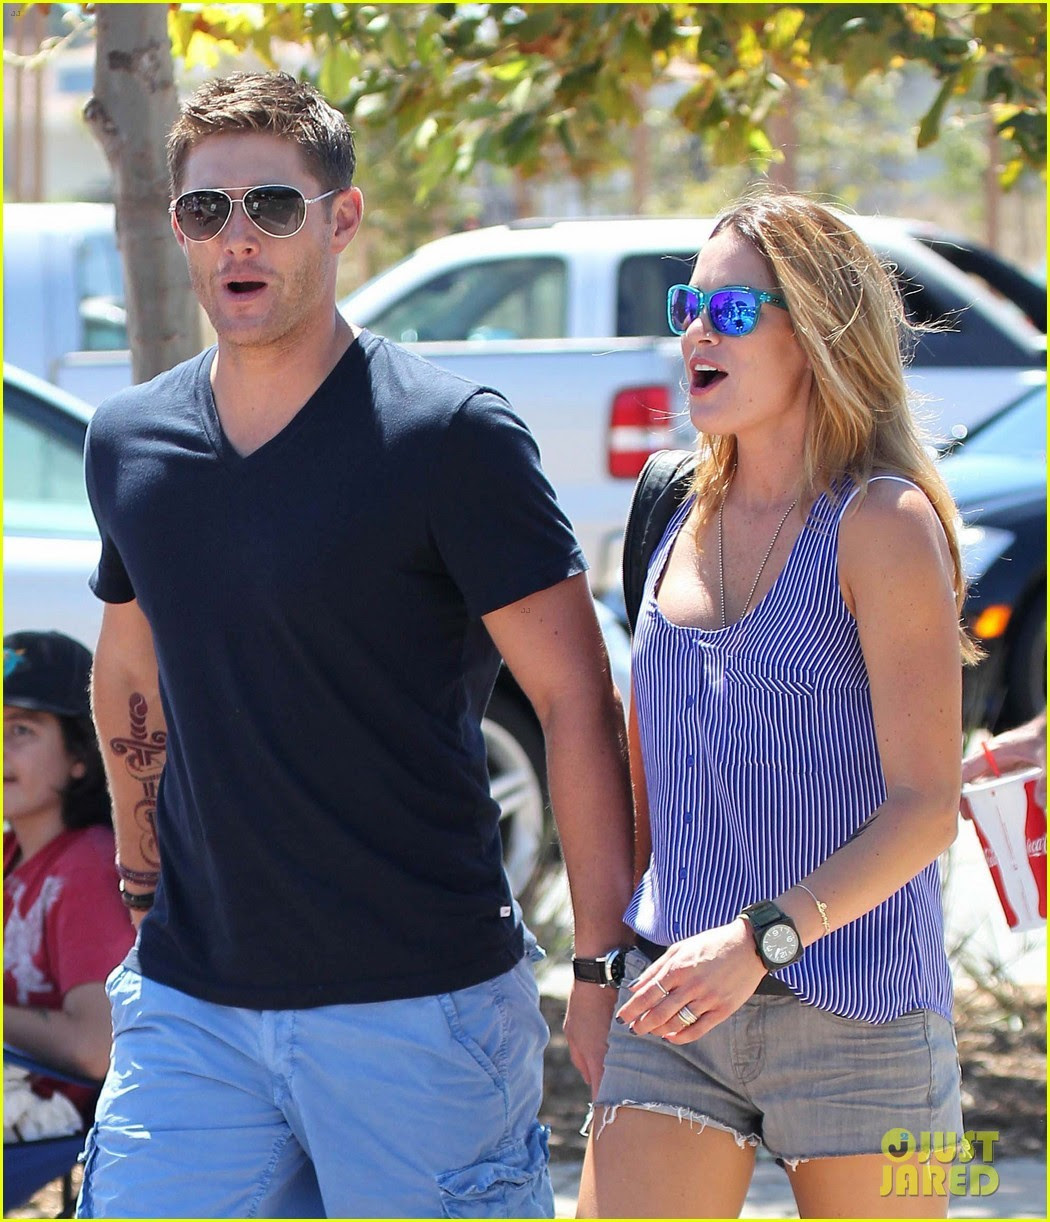 Jensen Ackles Engaged To Danneel Harris | d33blog